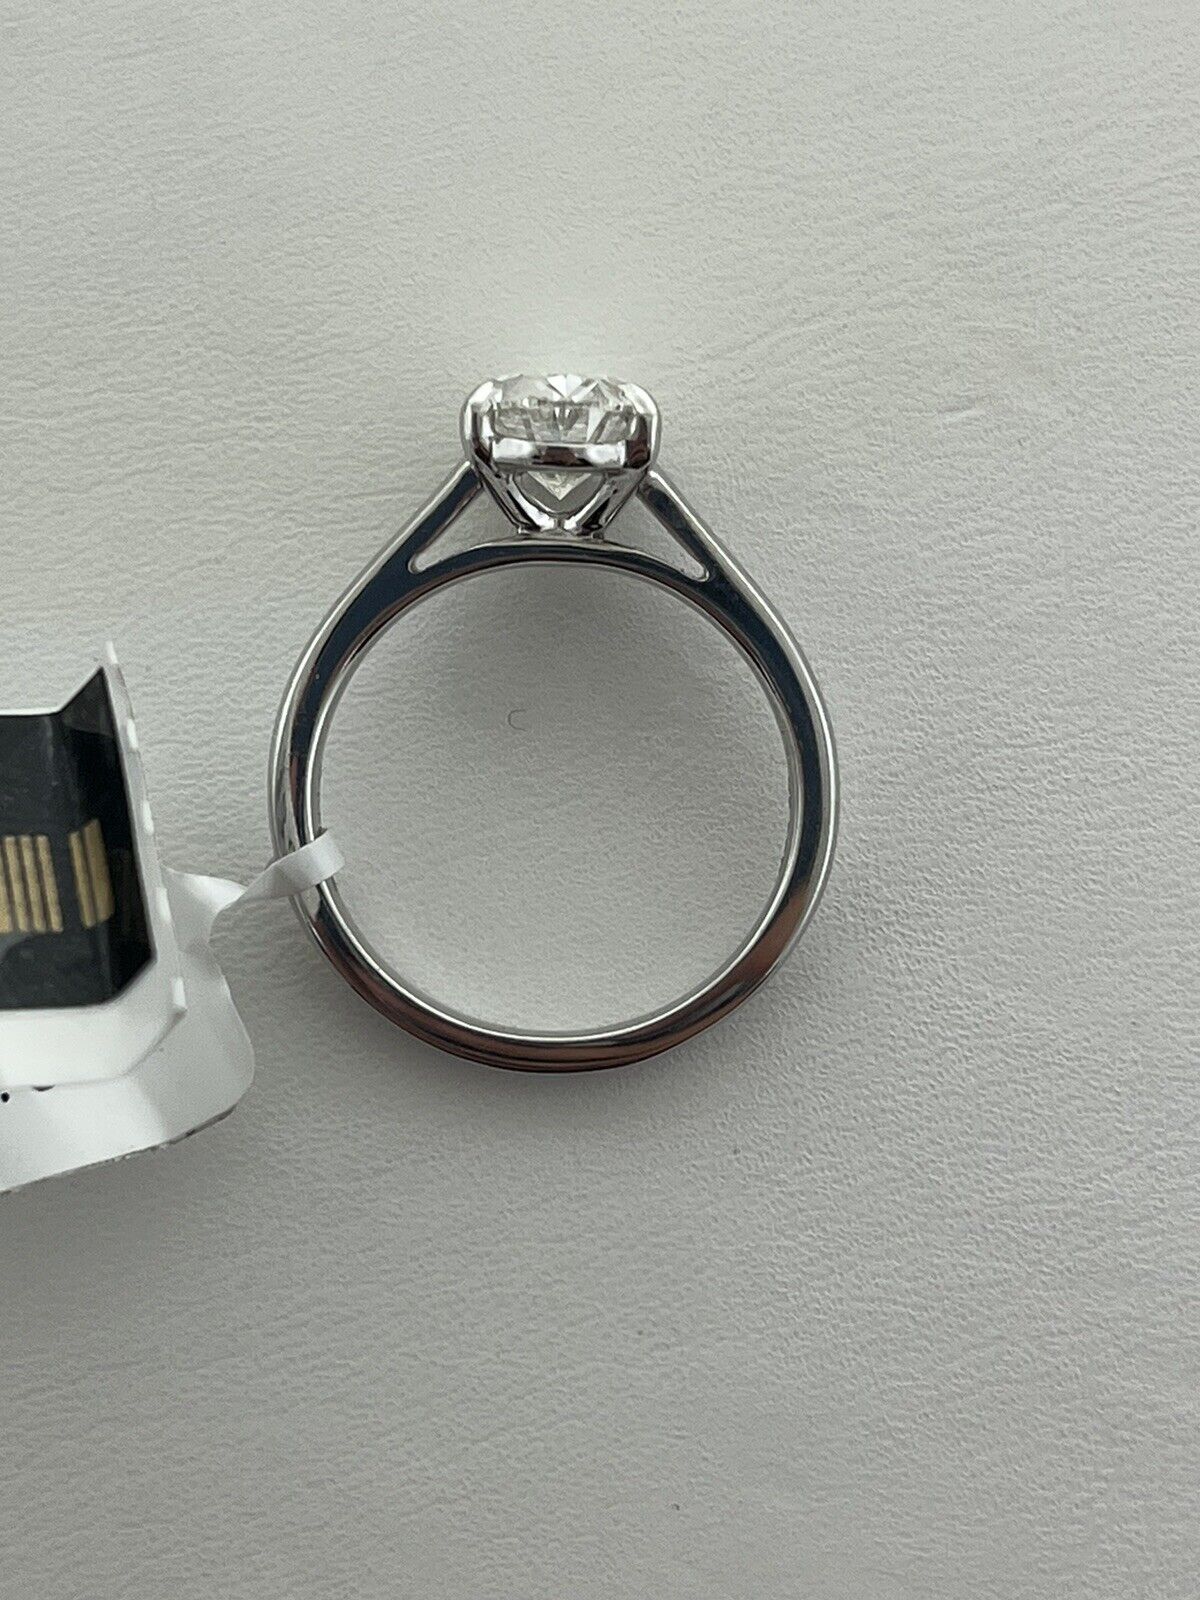 14k White Gold Ring 1.99 Carat Lab Grown Oval Diamond Engagement Ring Size 7